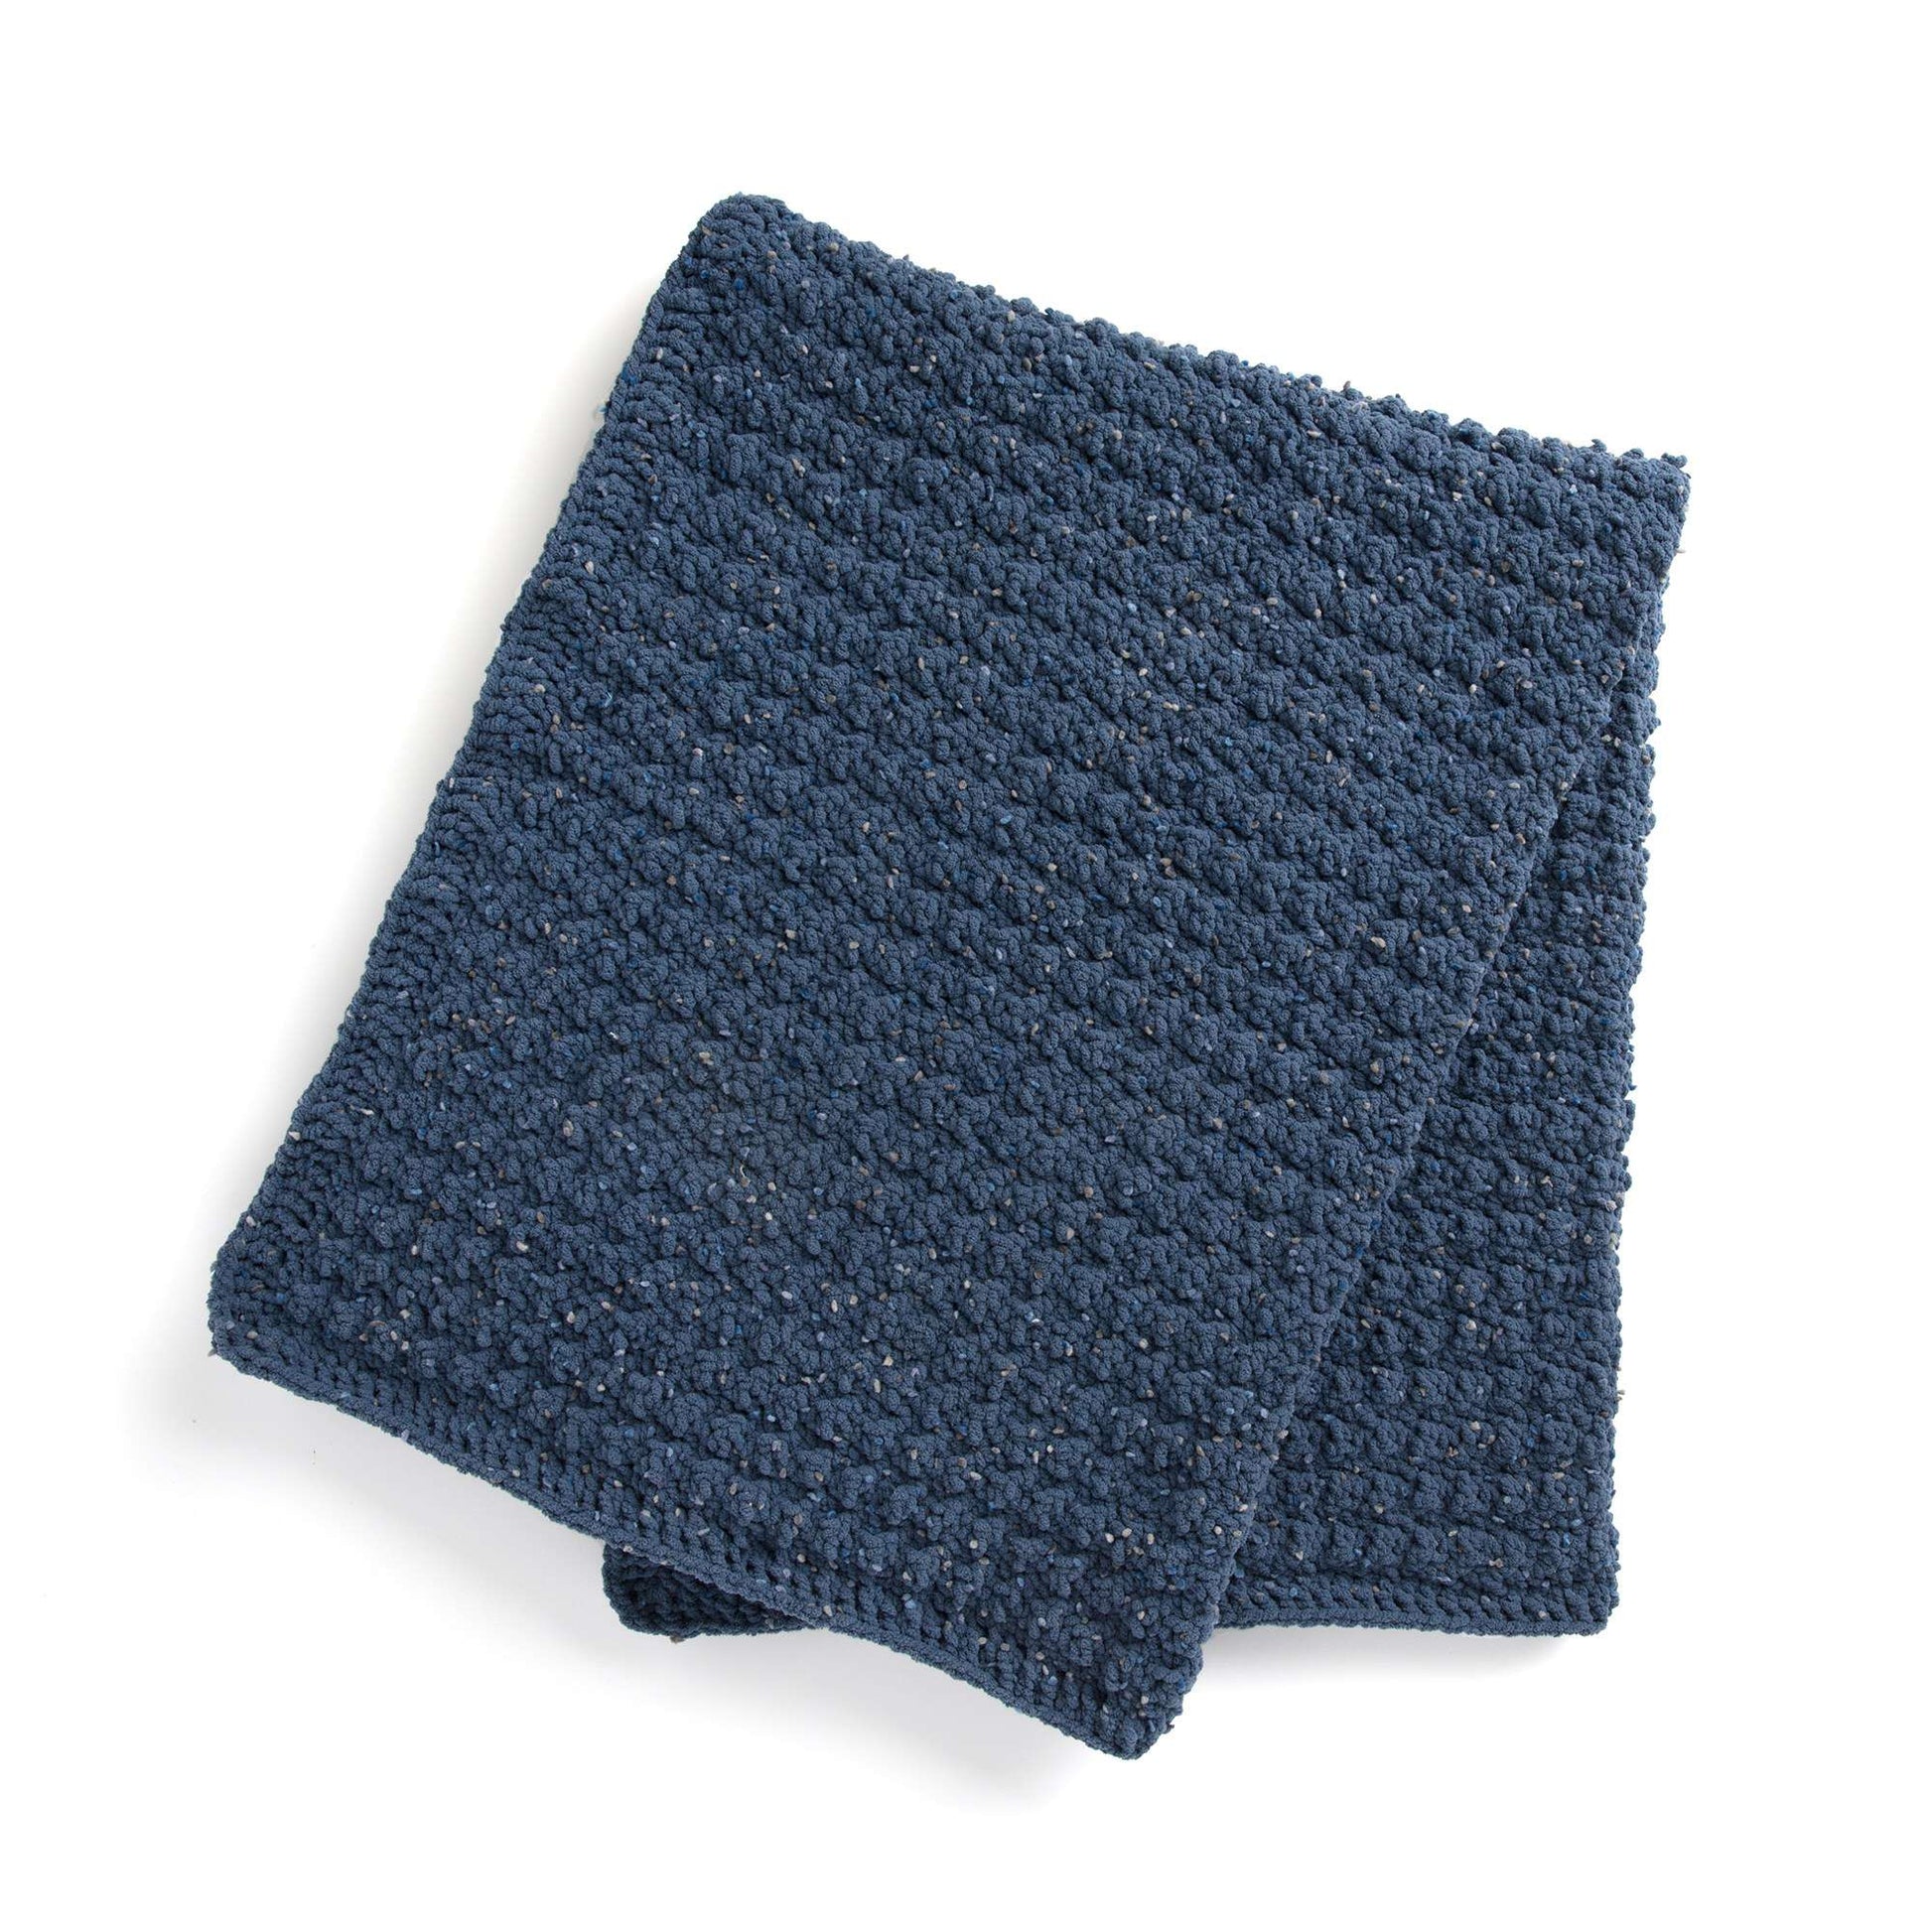 Free Bernat Tiny Bubble Confetti Crochet Blanket Pattern